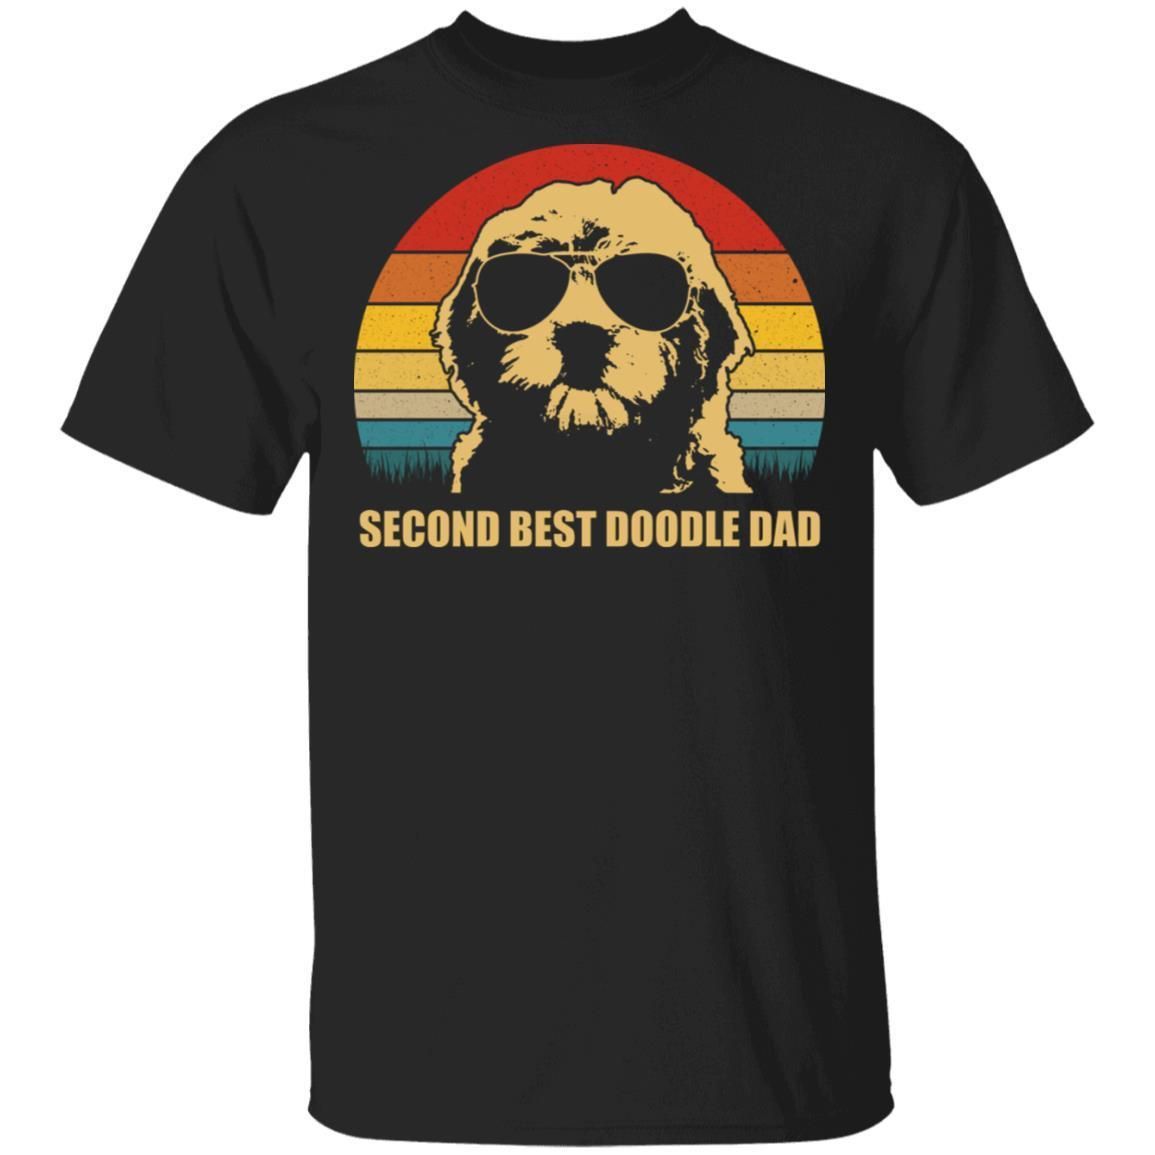 Second Best Doodle Dad shirts